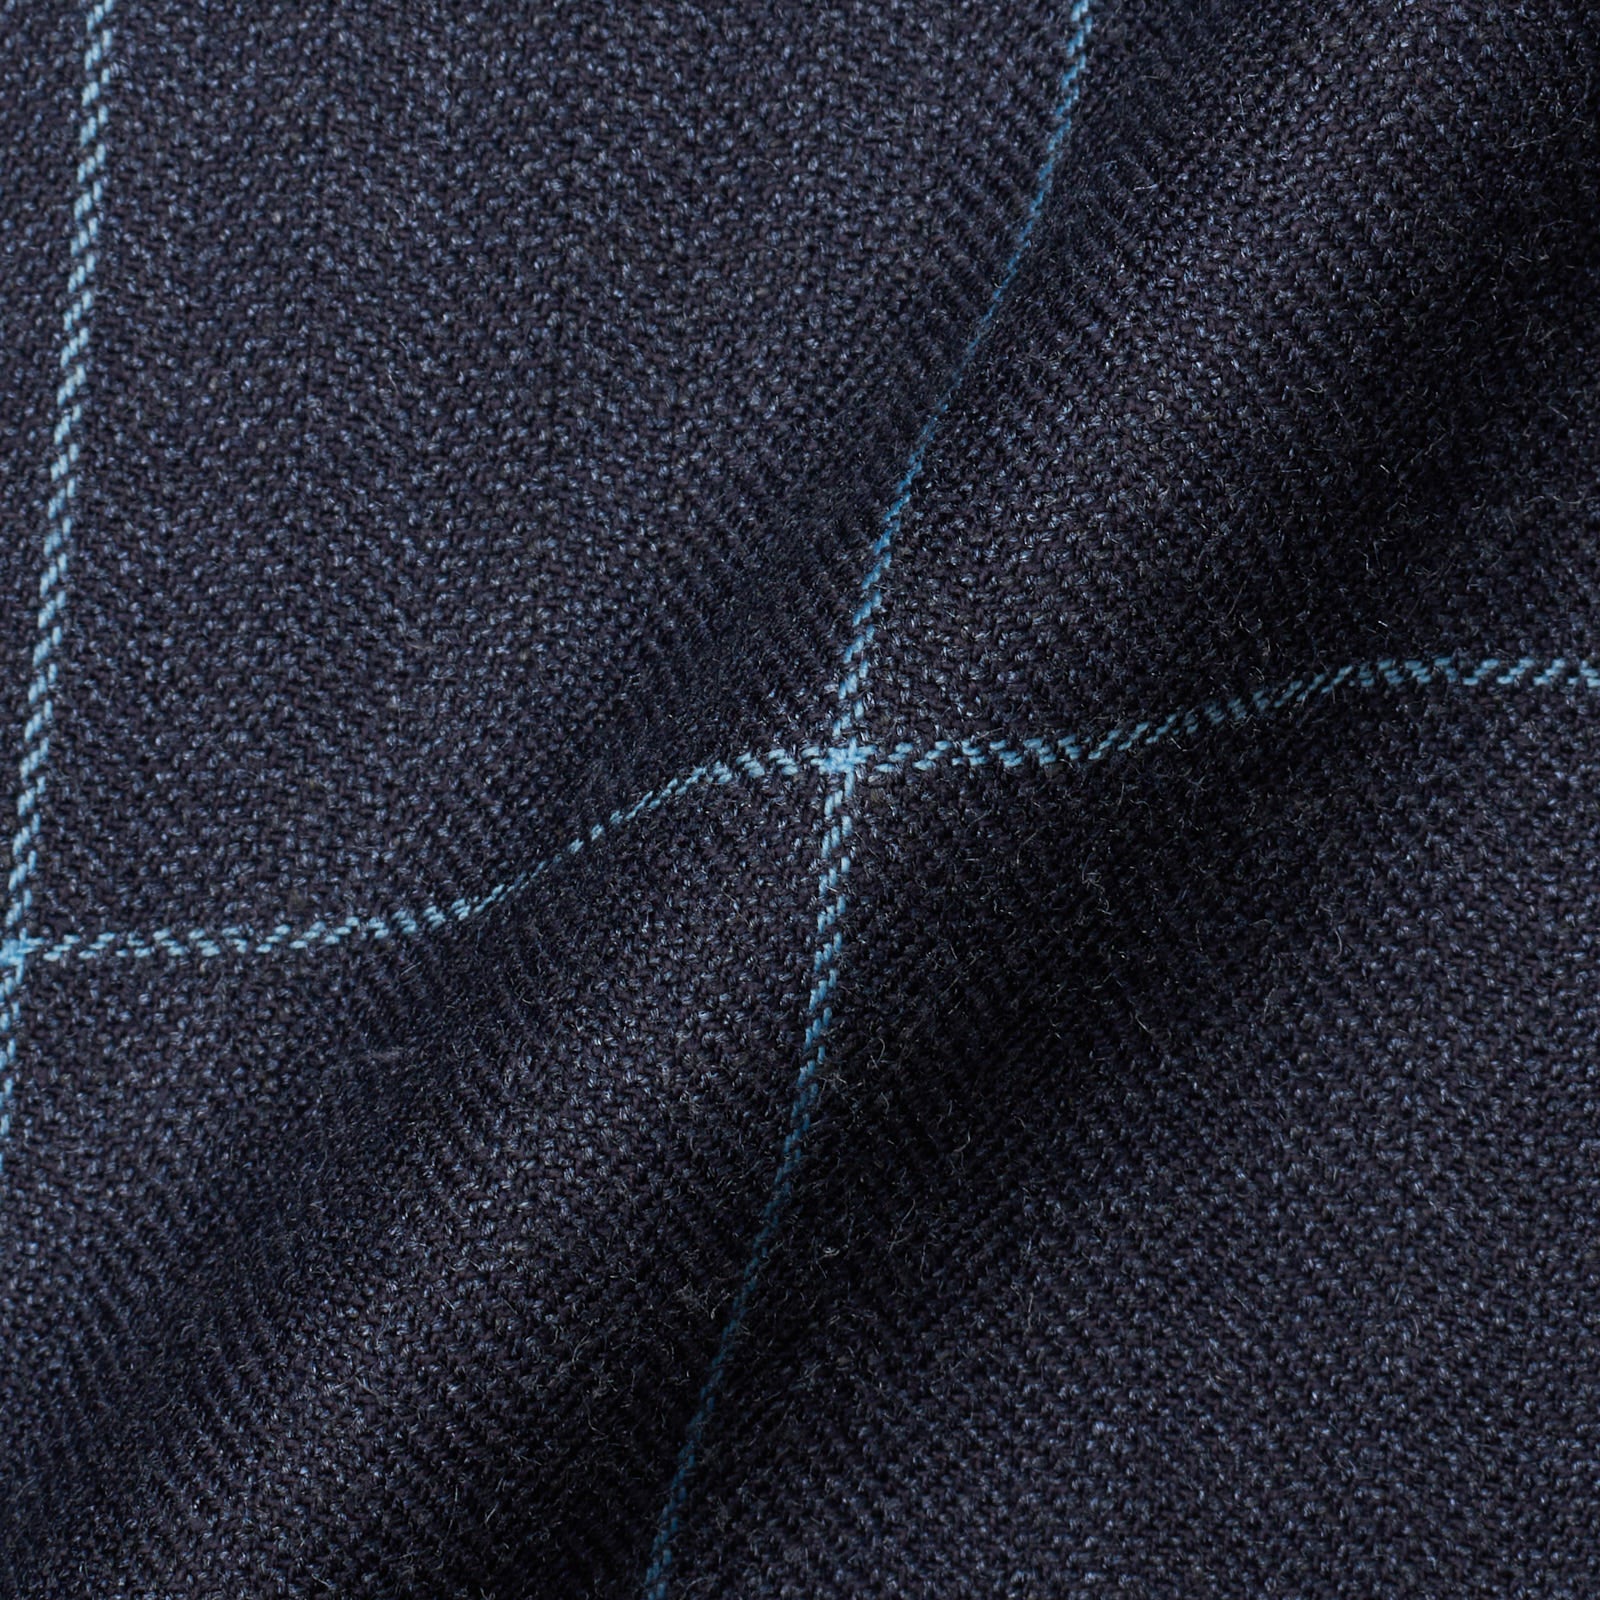 RUBINACCI LH Handmade Bespoke Blue Wool-Silk-Cashmere Jacket EU 50 NEW US 40 RUBINACCI